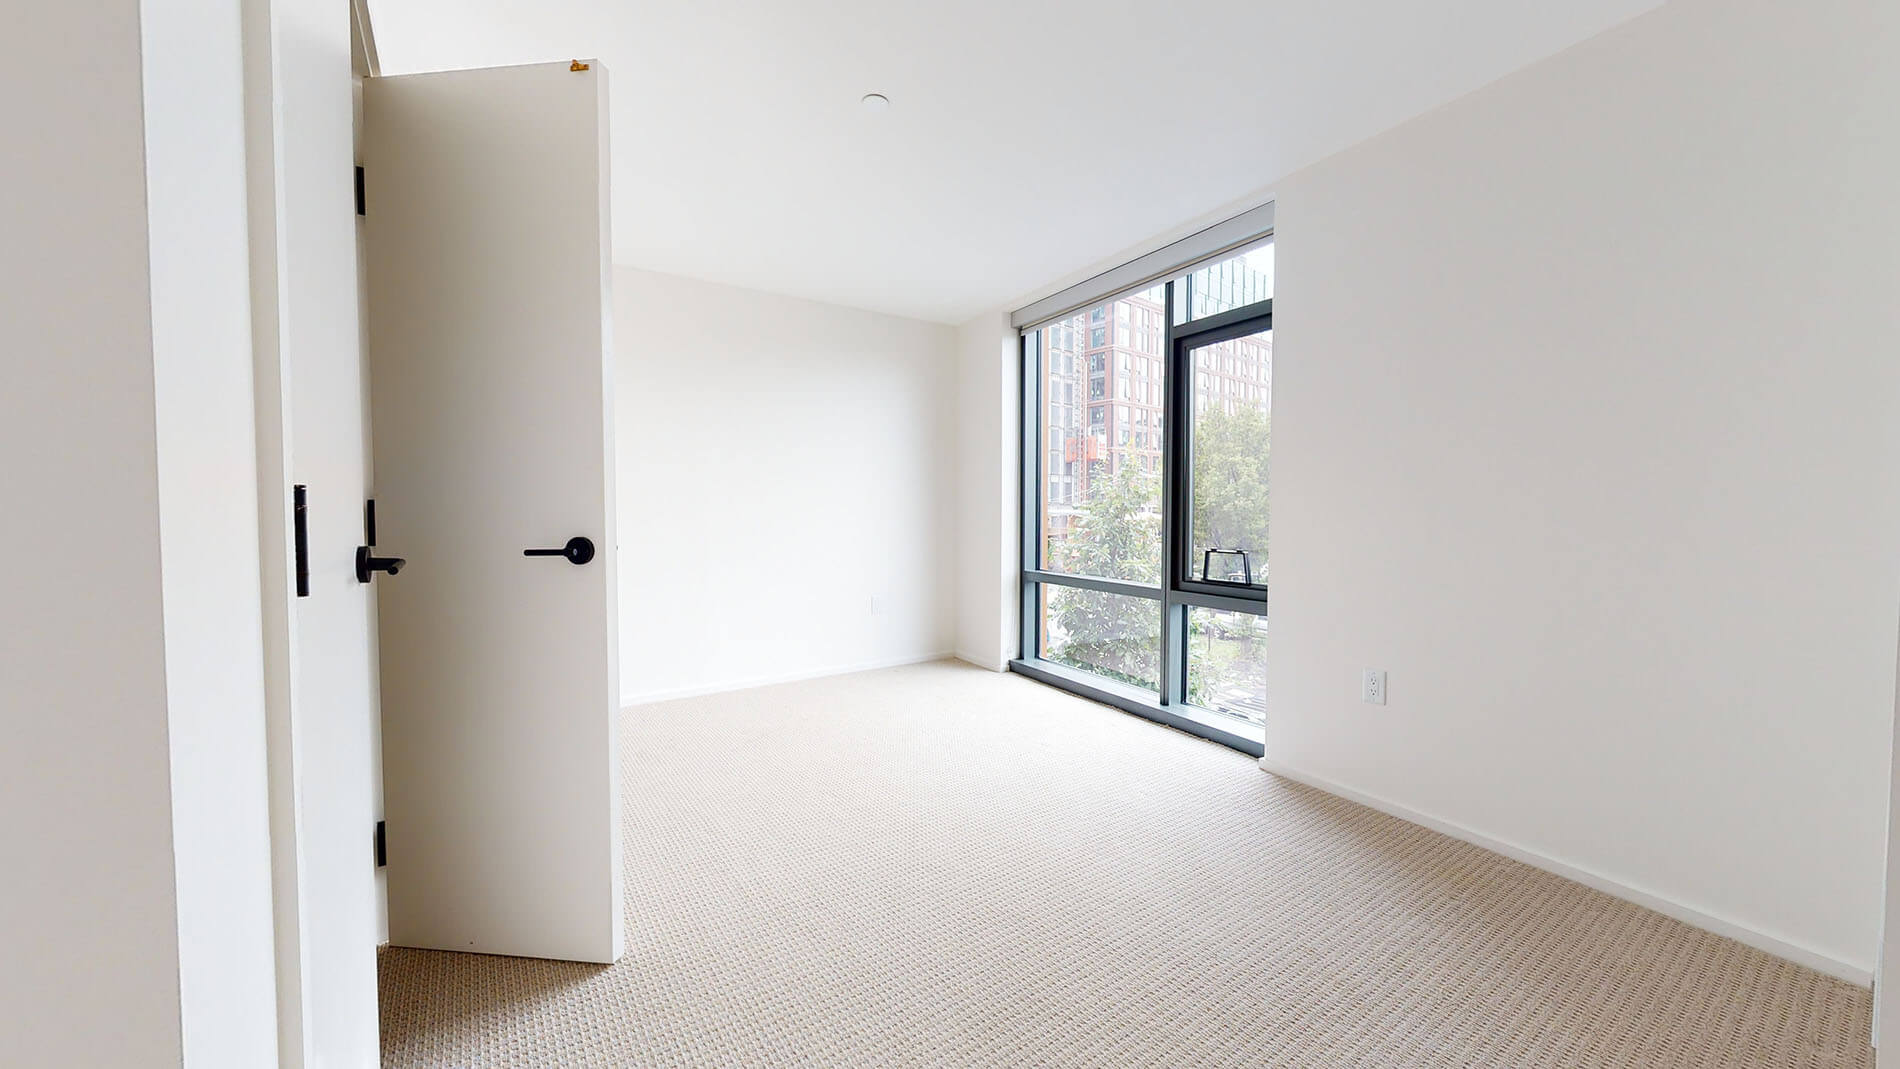 Photos of apartment on Harrison Ave.,Boston MA 02118